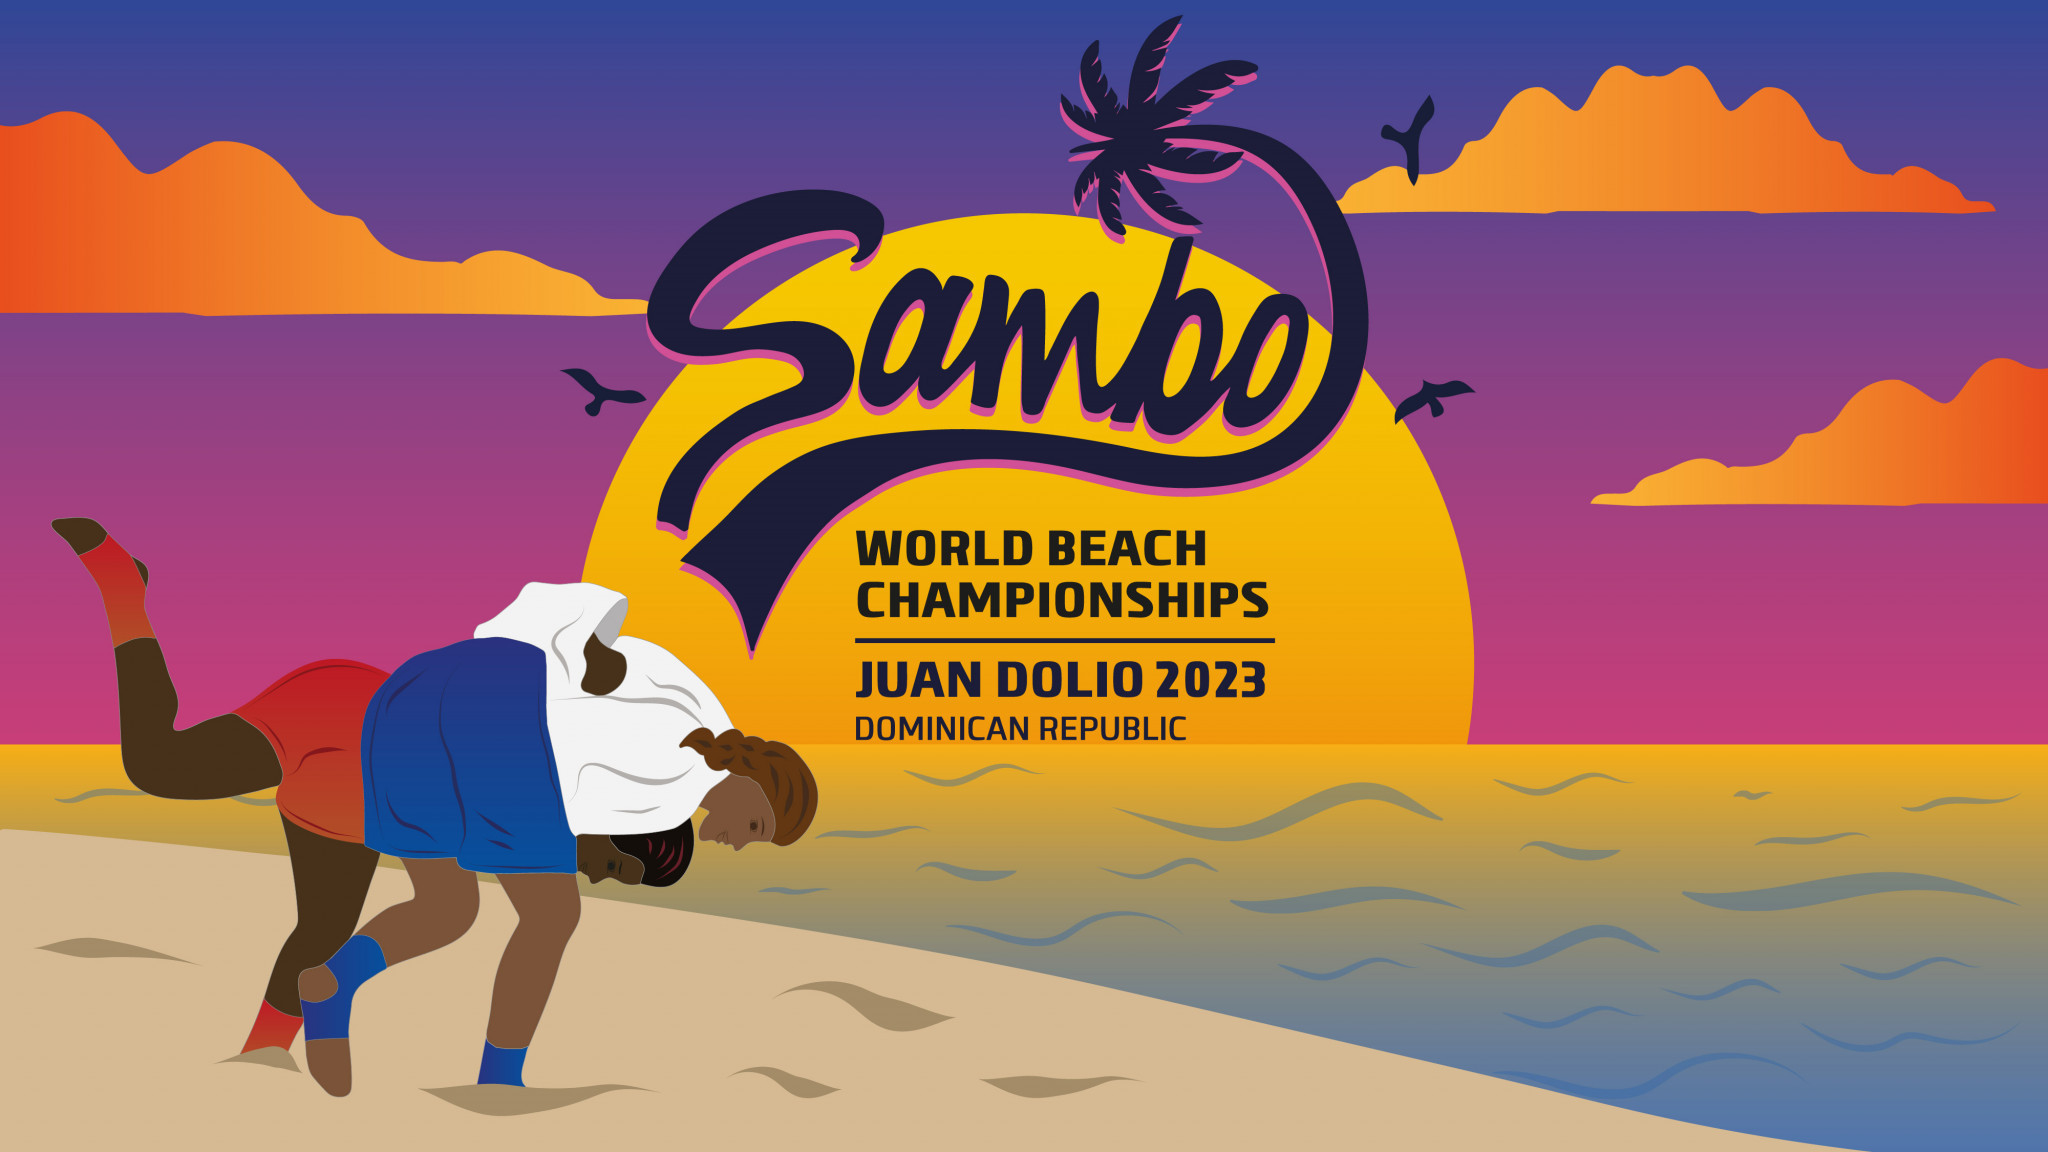 FIAS athletes dominate World Beach Sambo Championships in Dominican Republic